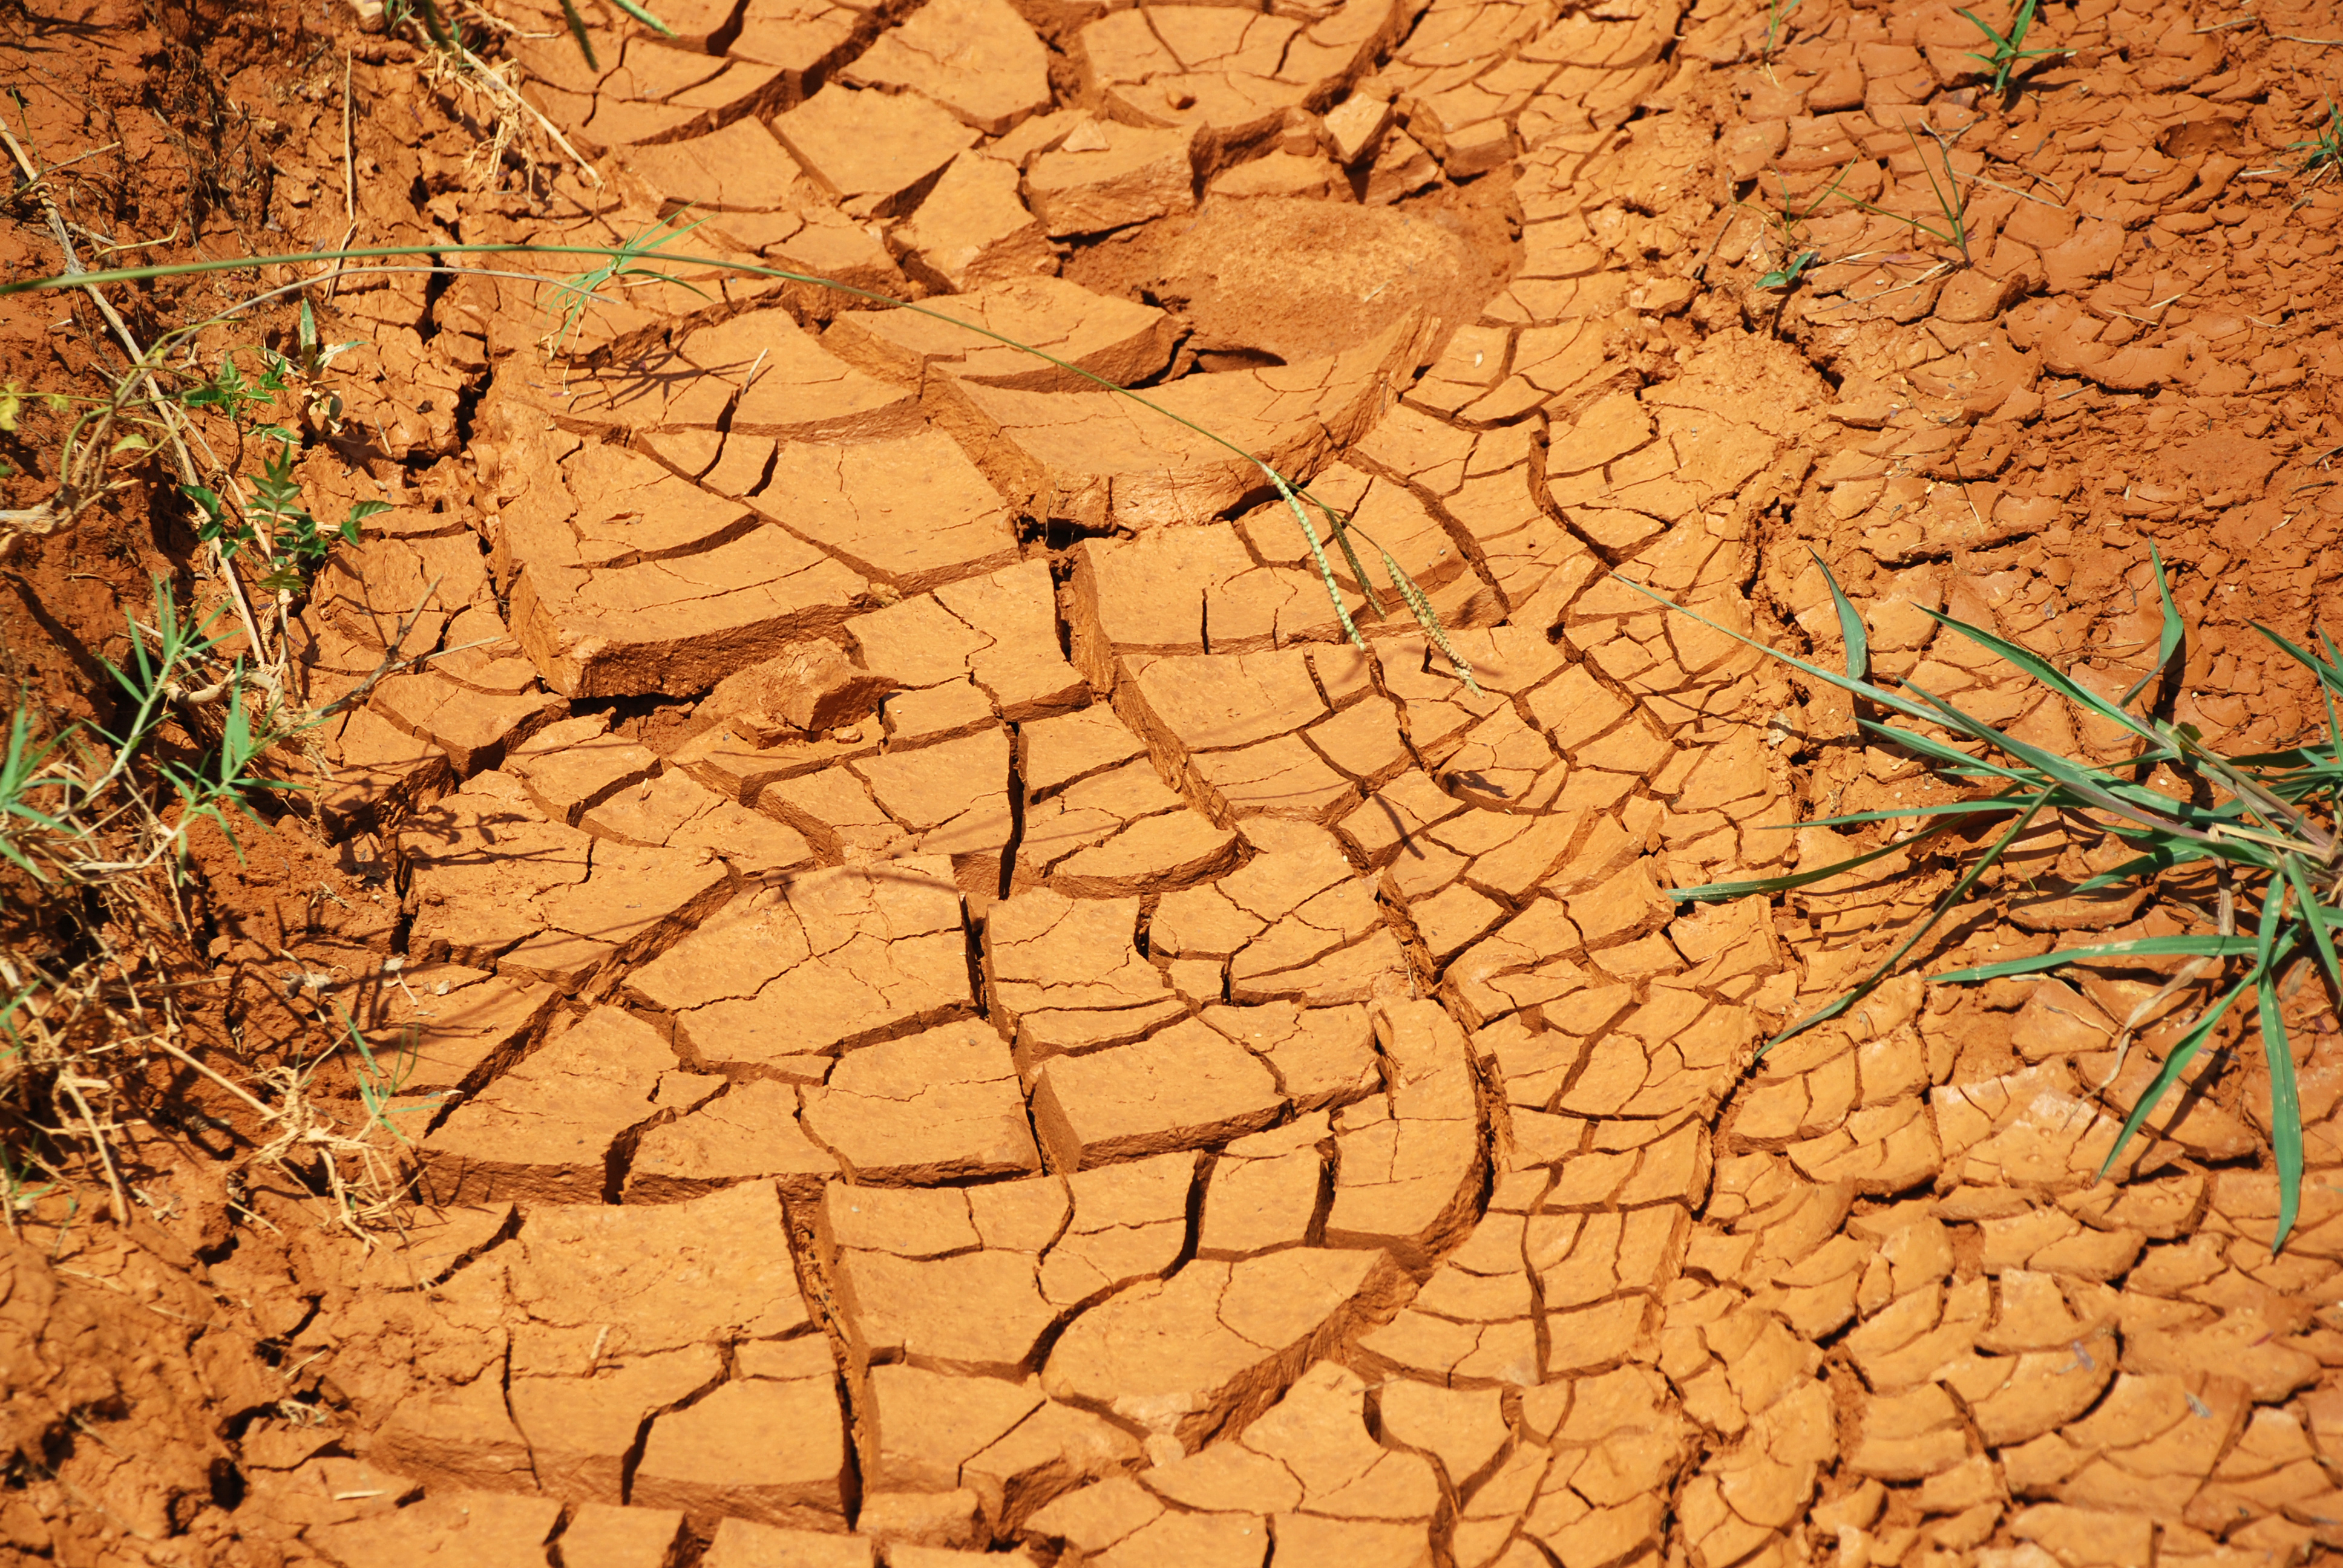 File:Dry Ground.jpg - Wikimedia Commons